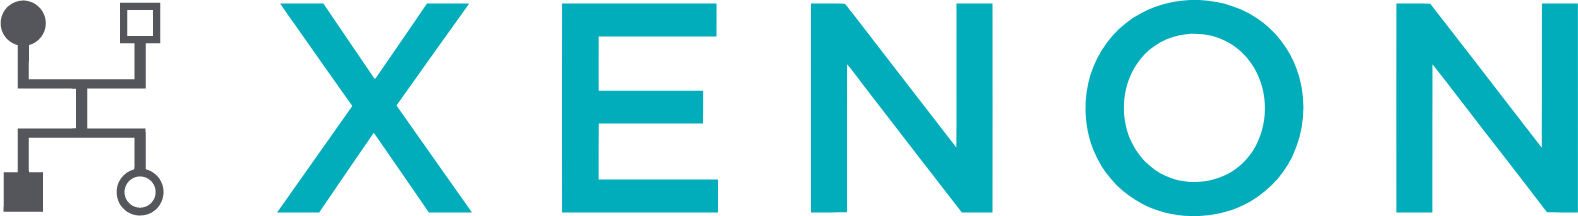 Xenon Pharmaceuticals logo large (transparent PNG)